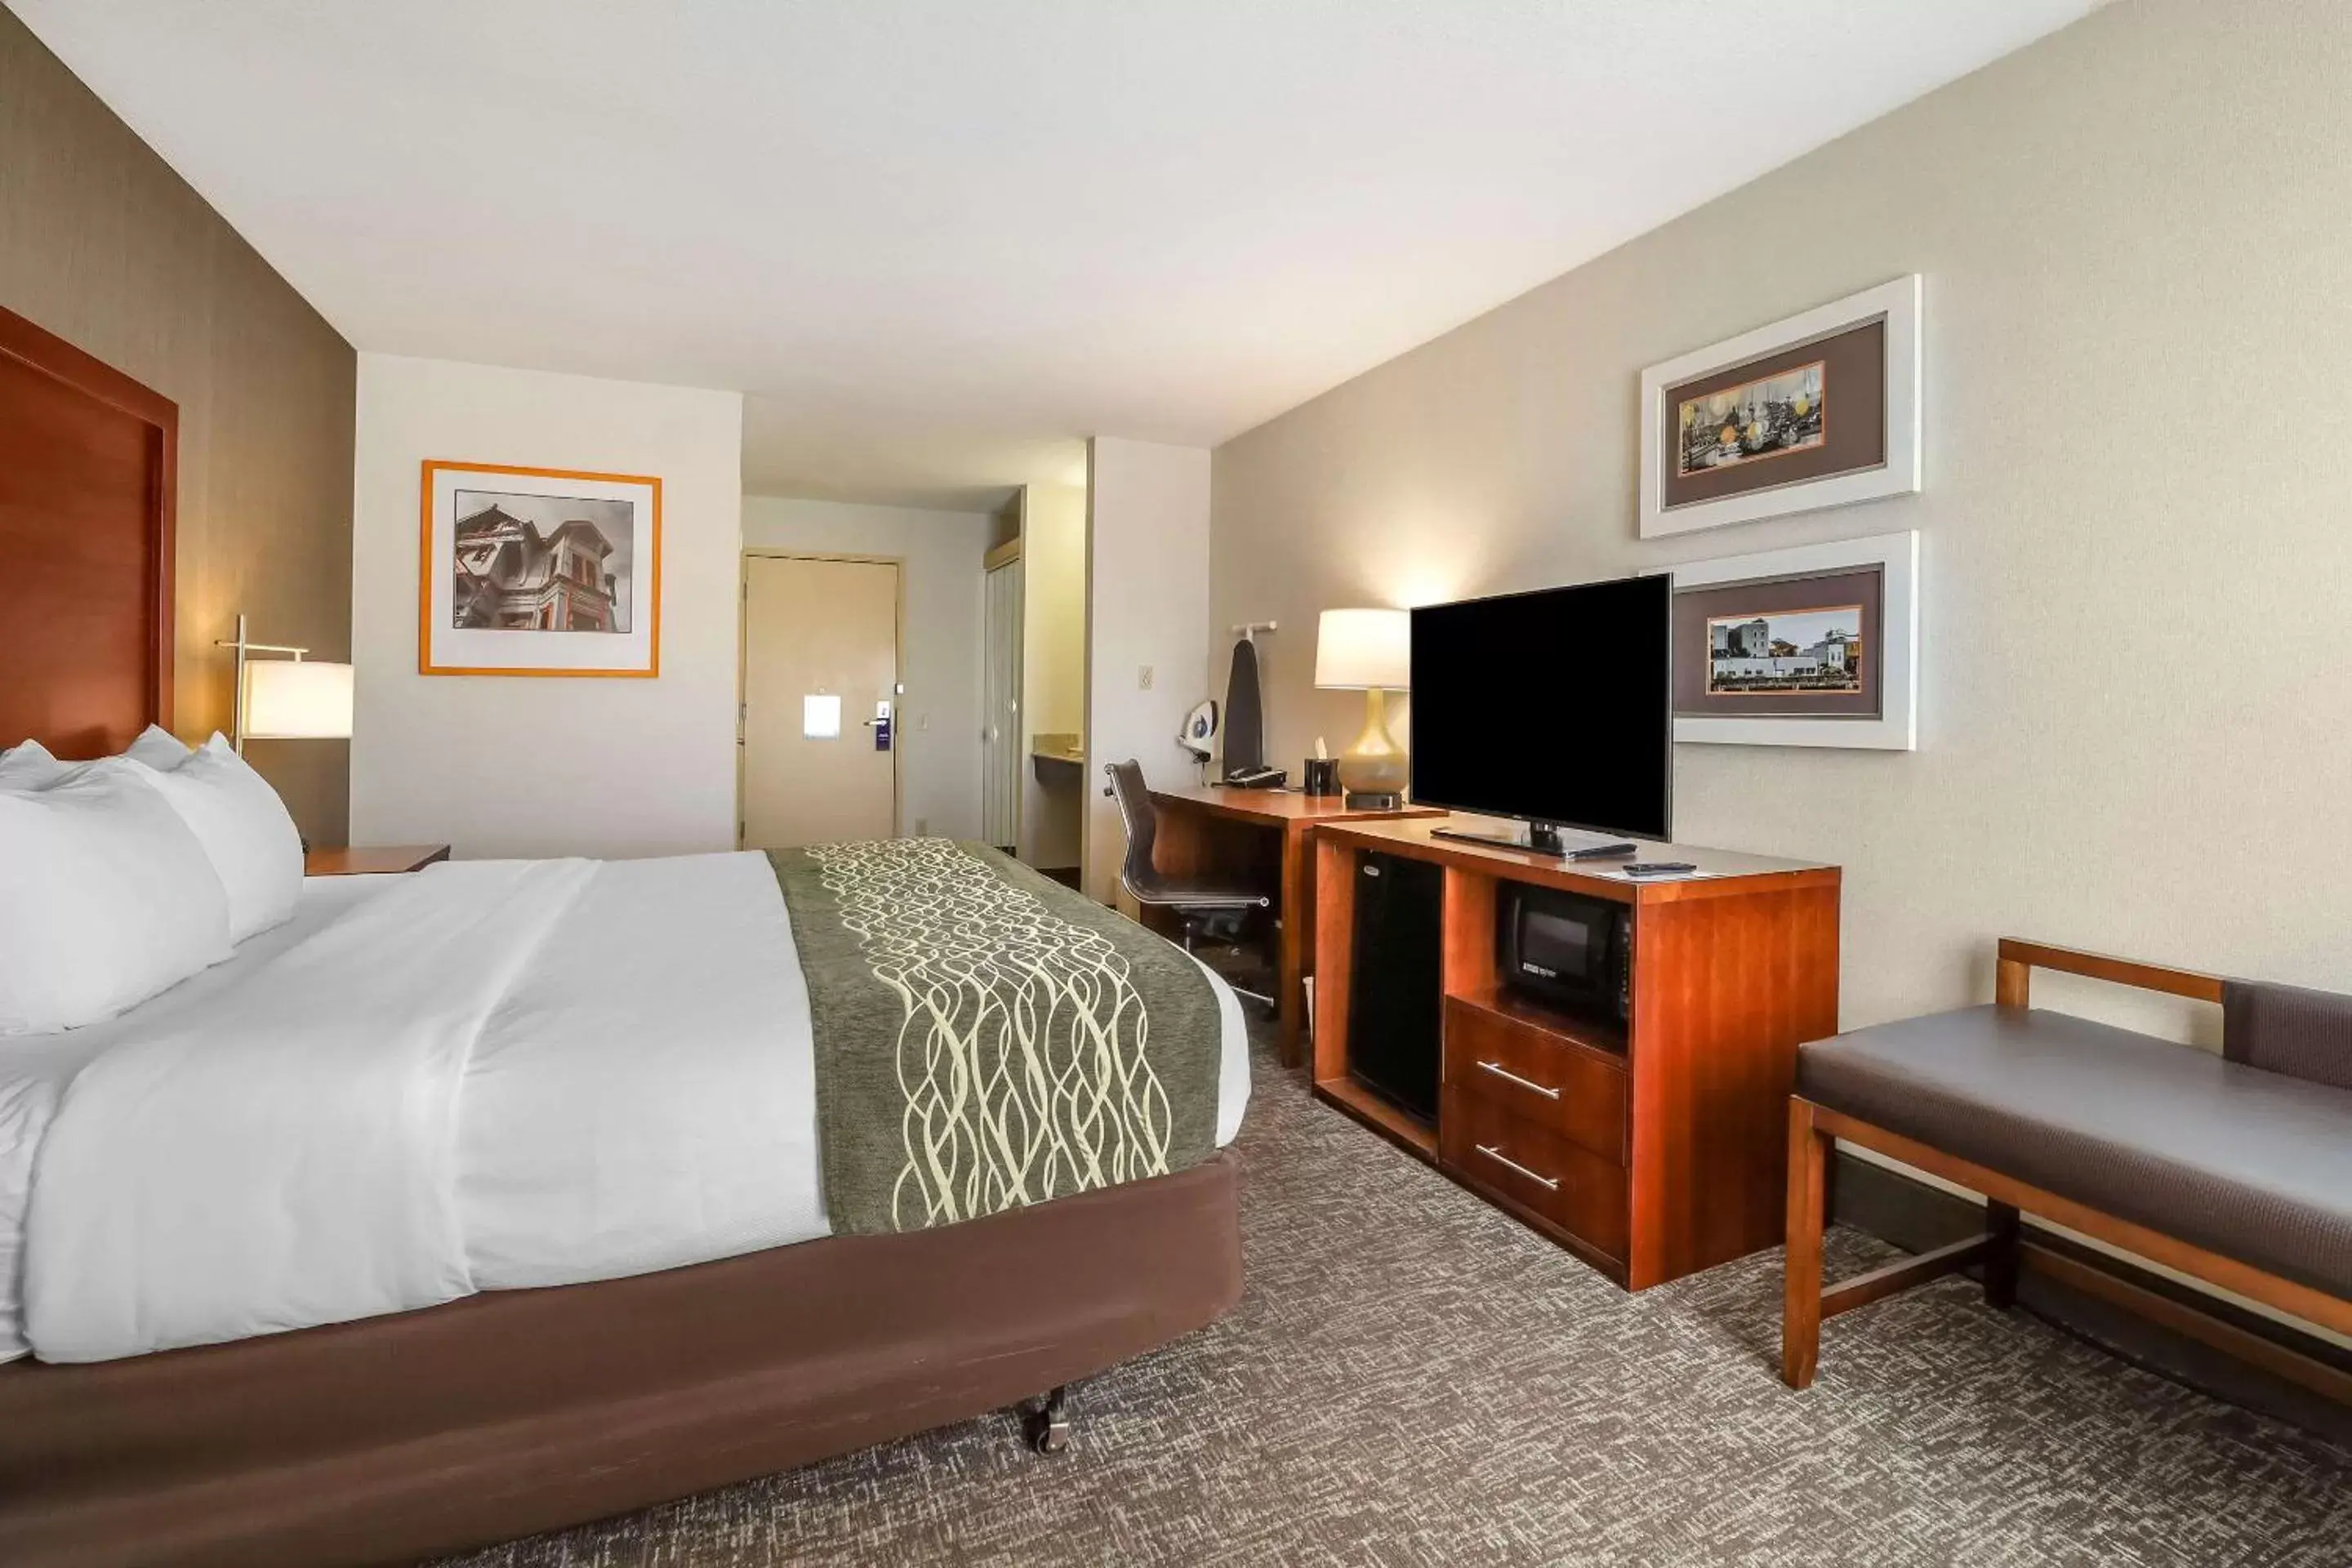 Bedroom, TV/Entertainment Center in Comfort Inn Humboldt Bay - Eureka